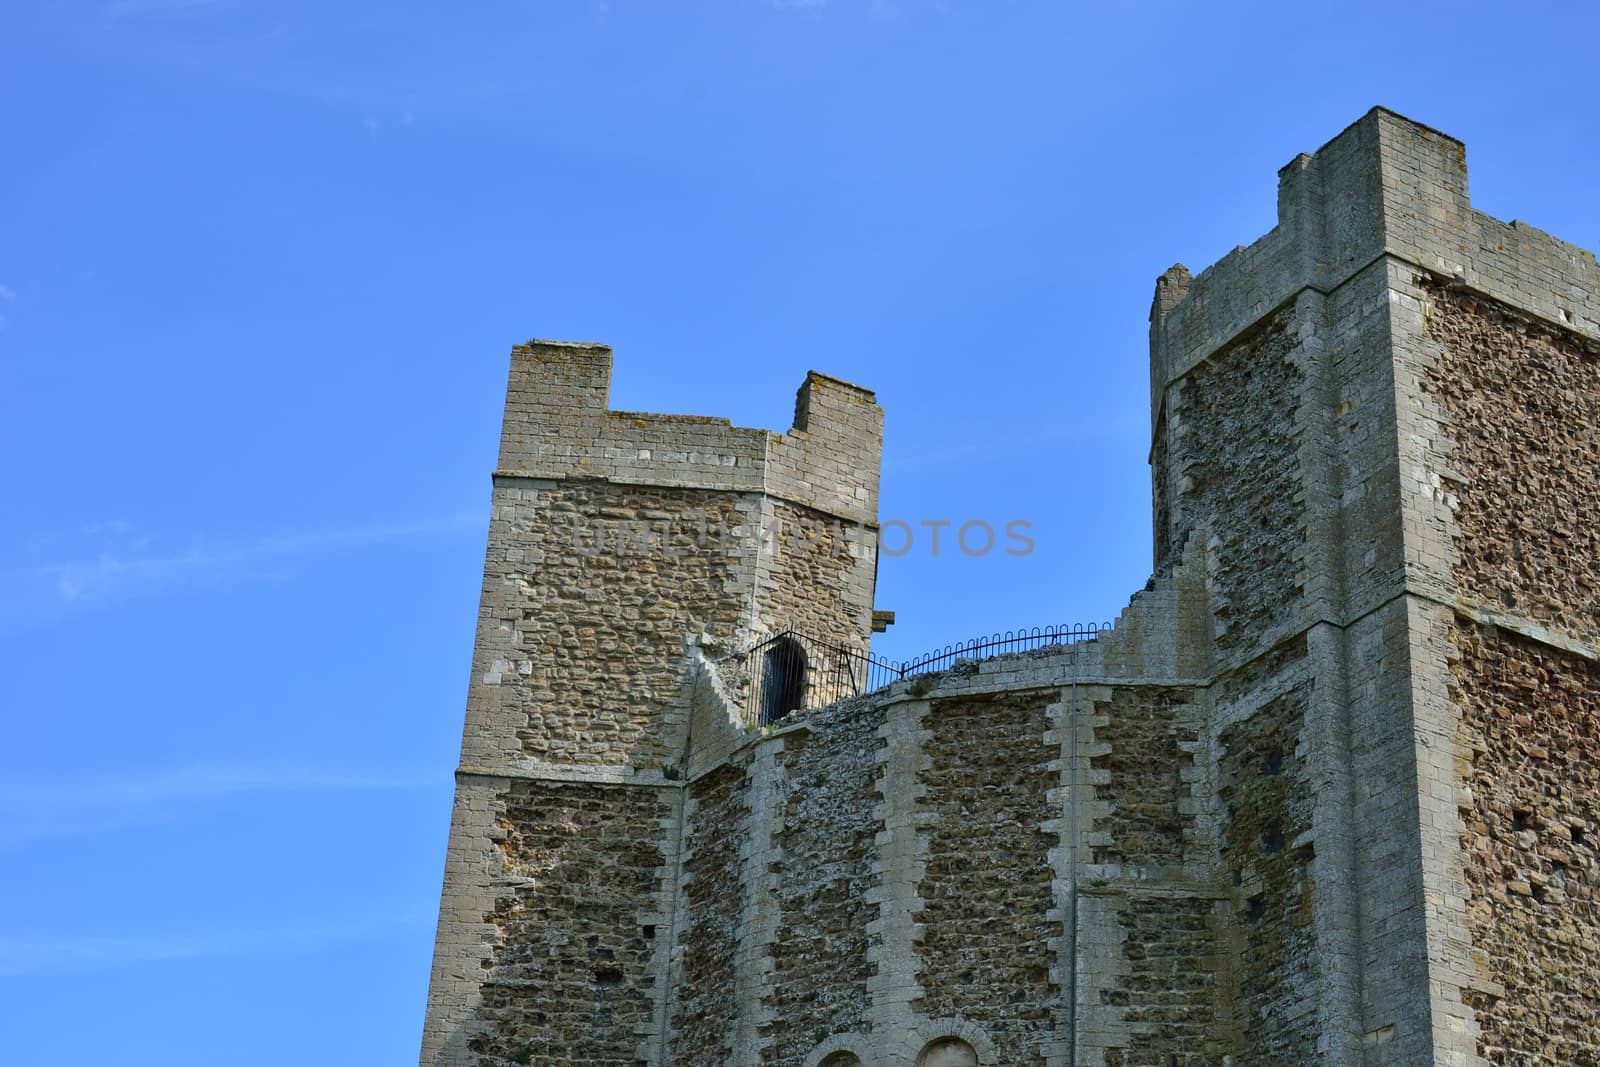 Top of Norman castle